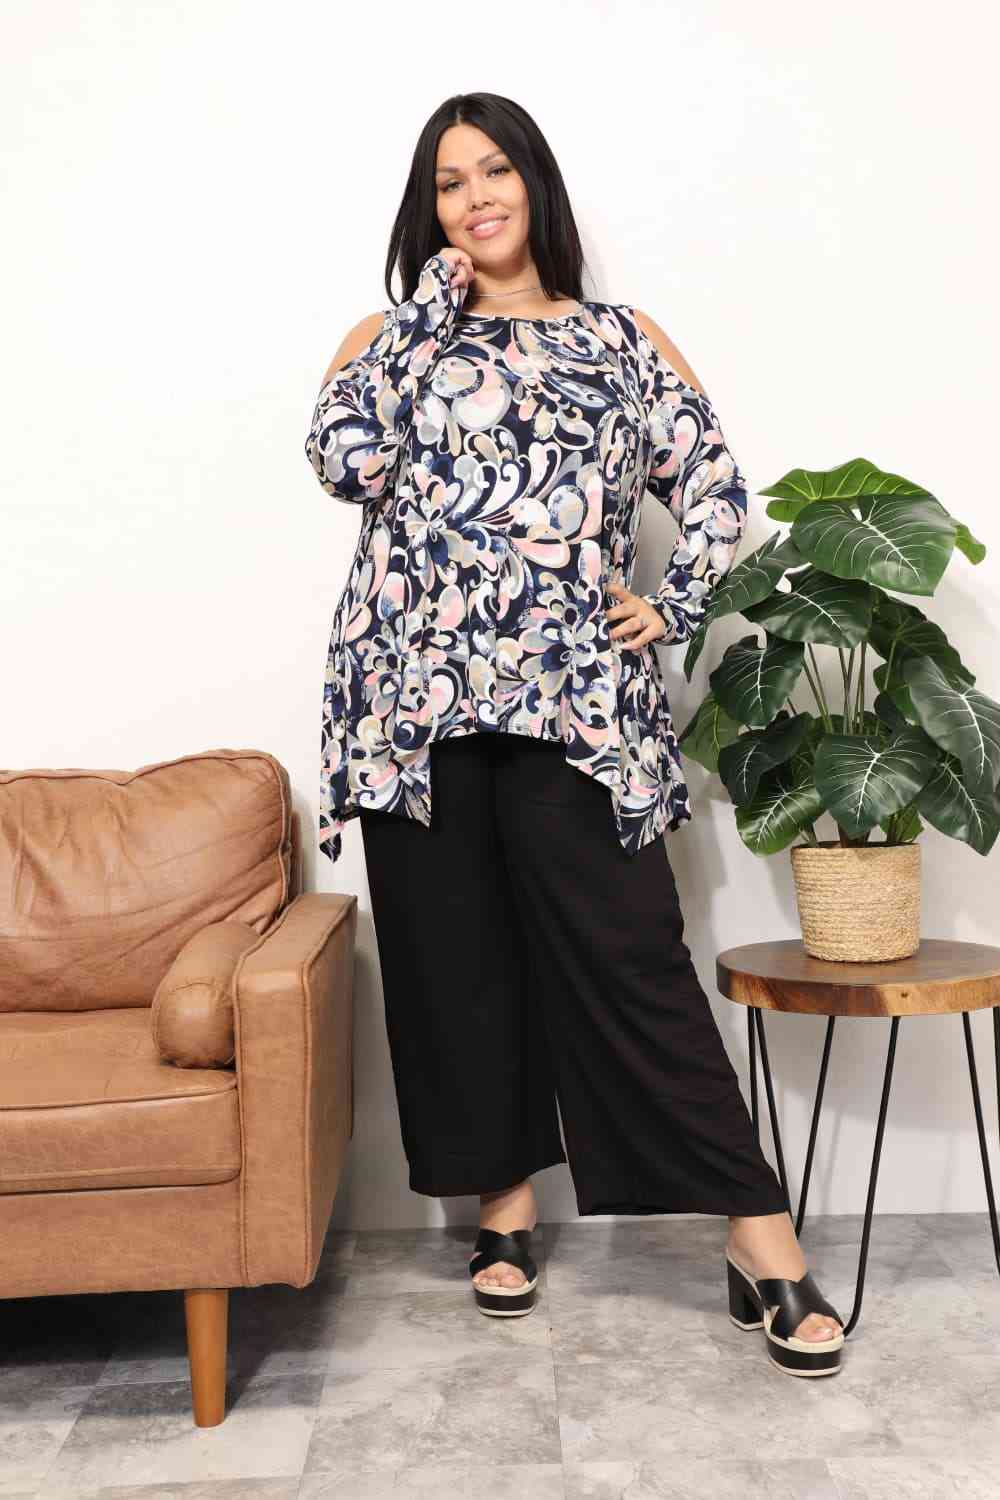 Sew In Love  Full Size Long Sleeve Flower Print Blouse - Tophatter Deals